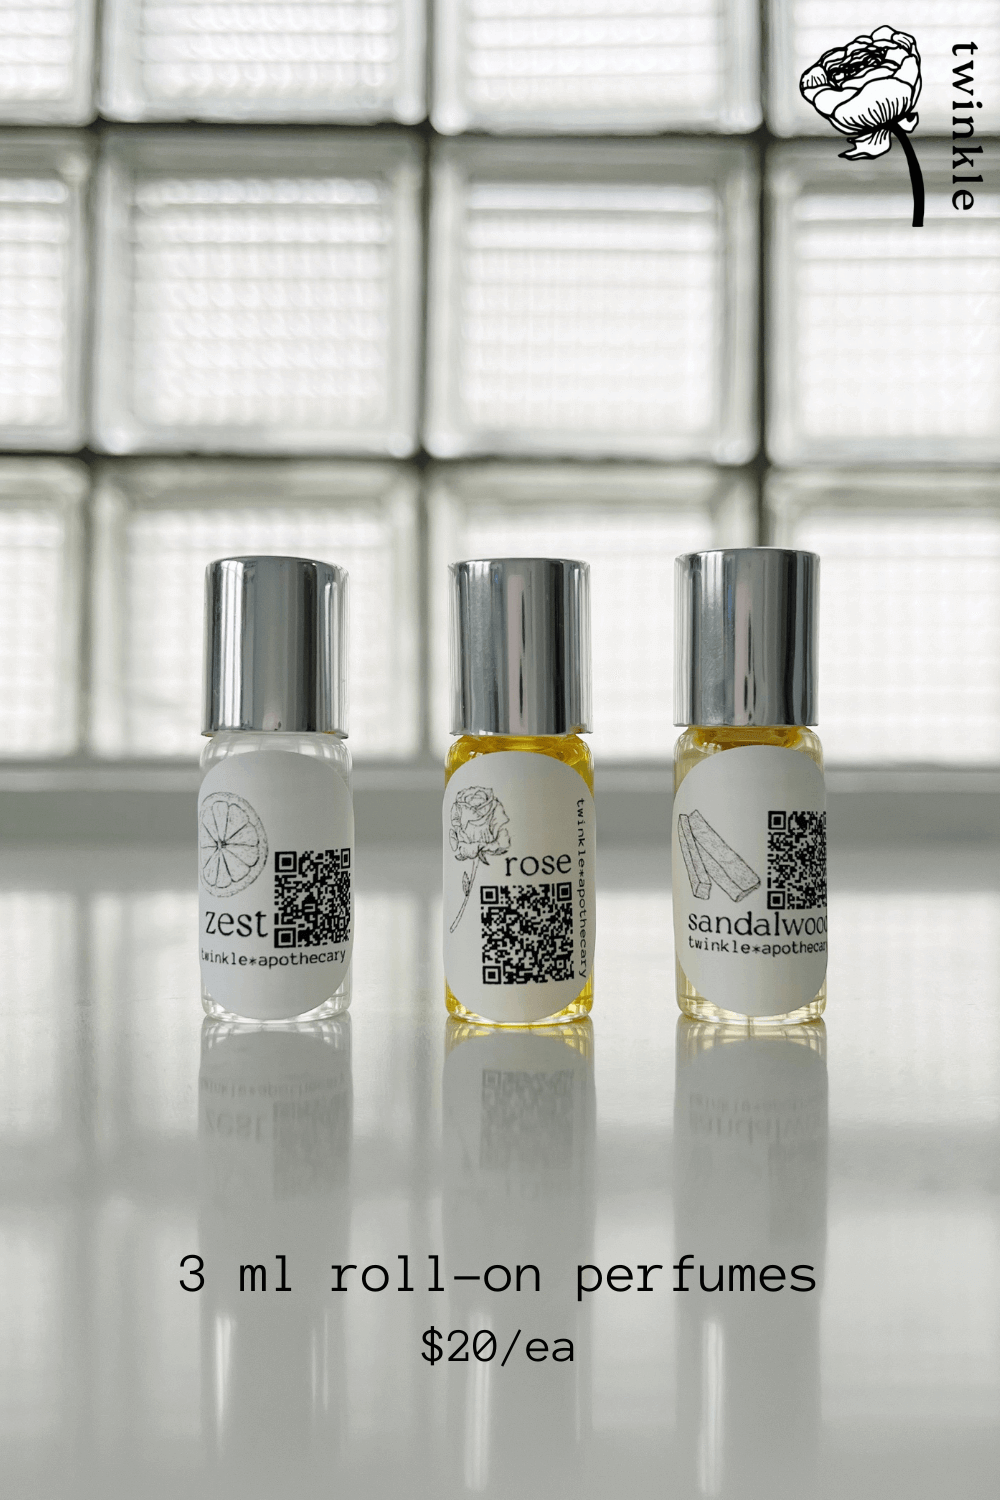 Conifer: Layering Fragrance